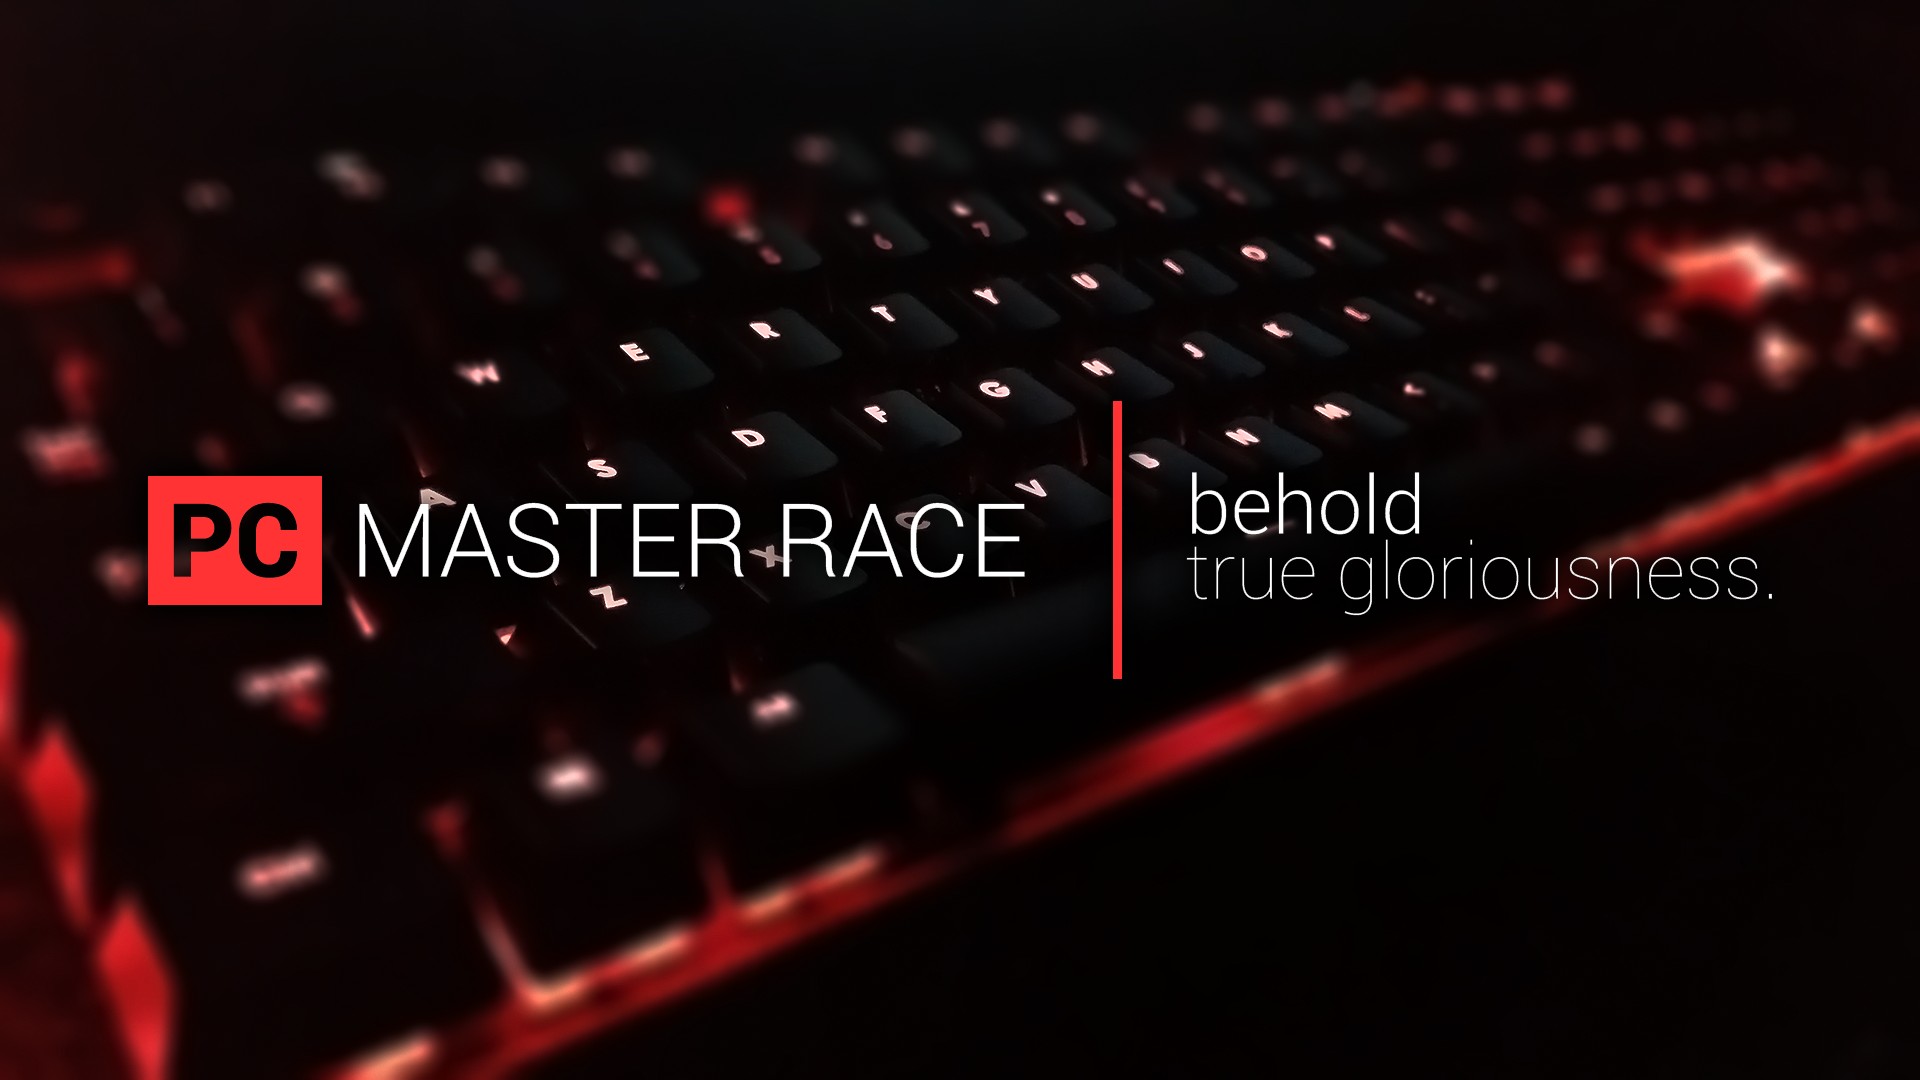 Master Race, Computer, Keyboards Wallpaper